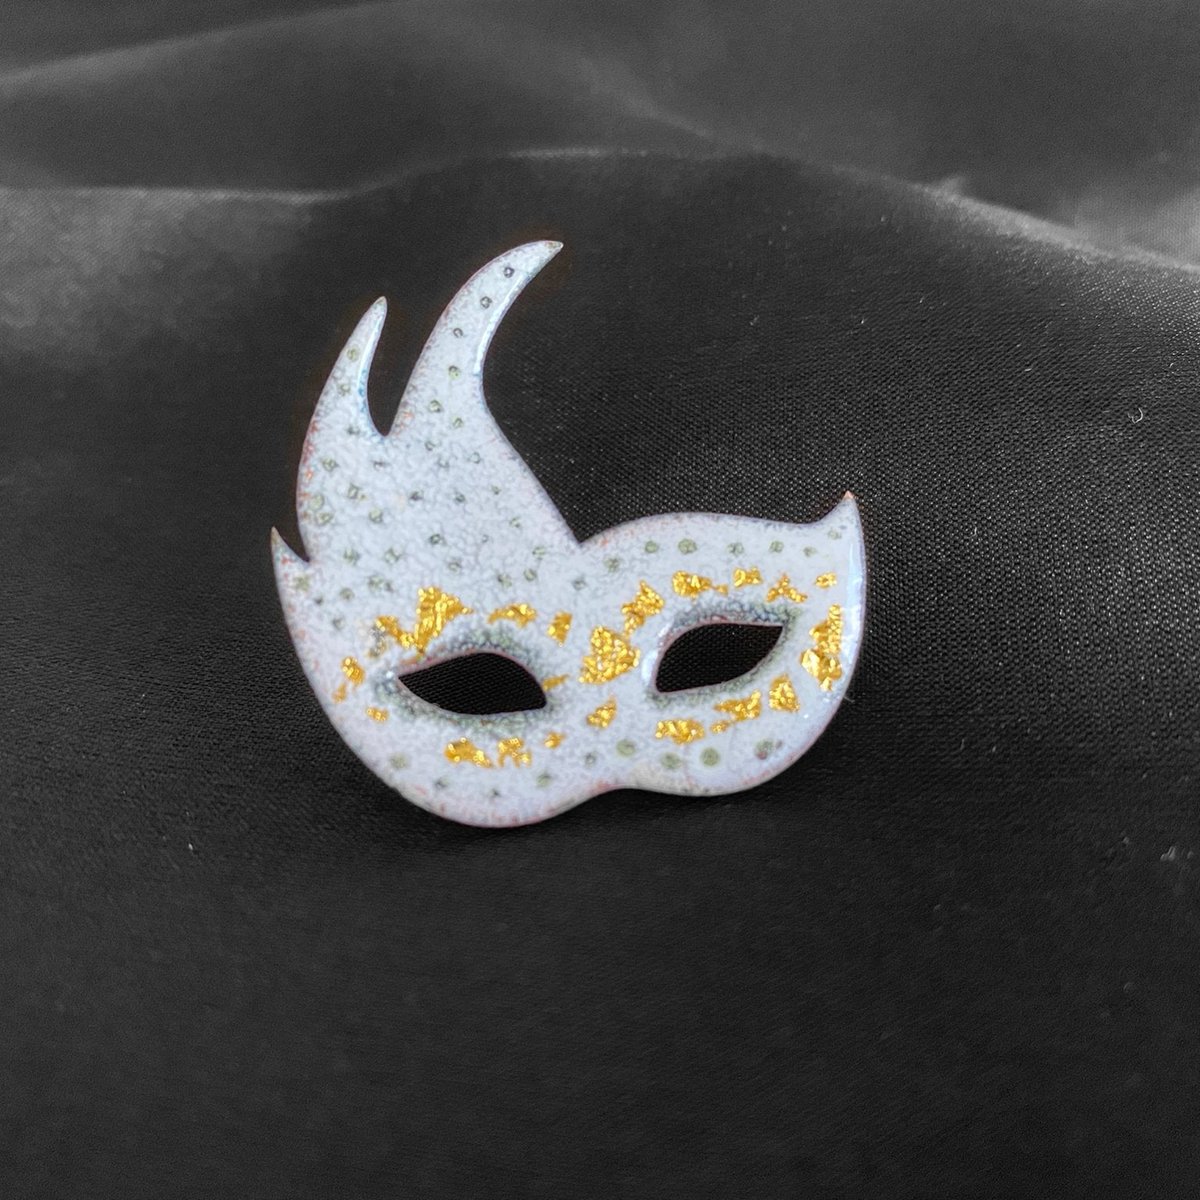 White and Gold Venetian Mask Brooch Pin tuppu.net/d23fbeb #inbizhour #UKHashtags ##UKGiftHour #bizbubble #HandmadeHour #shopsmall #giftideas #MHHSBD